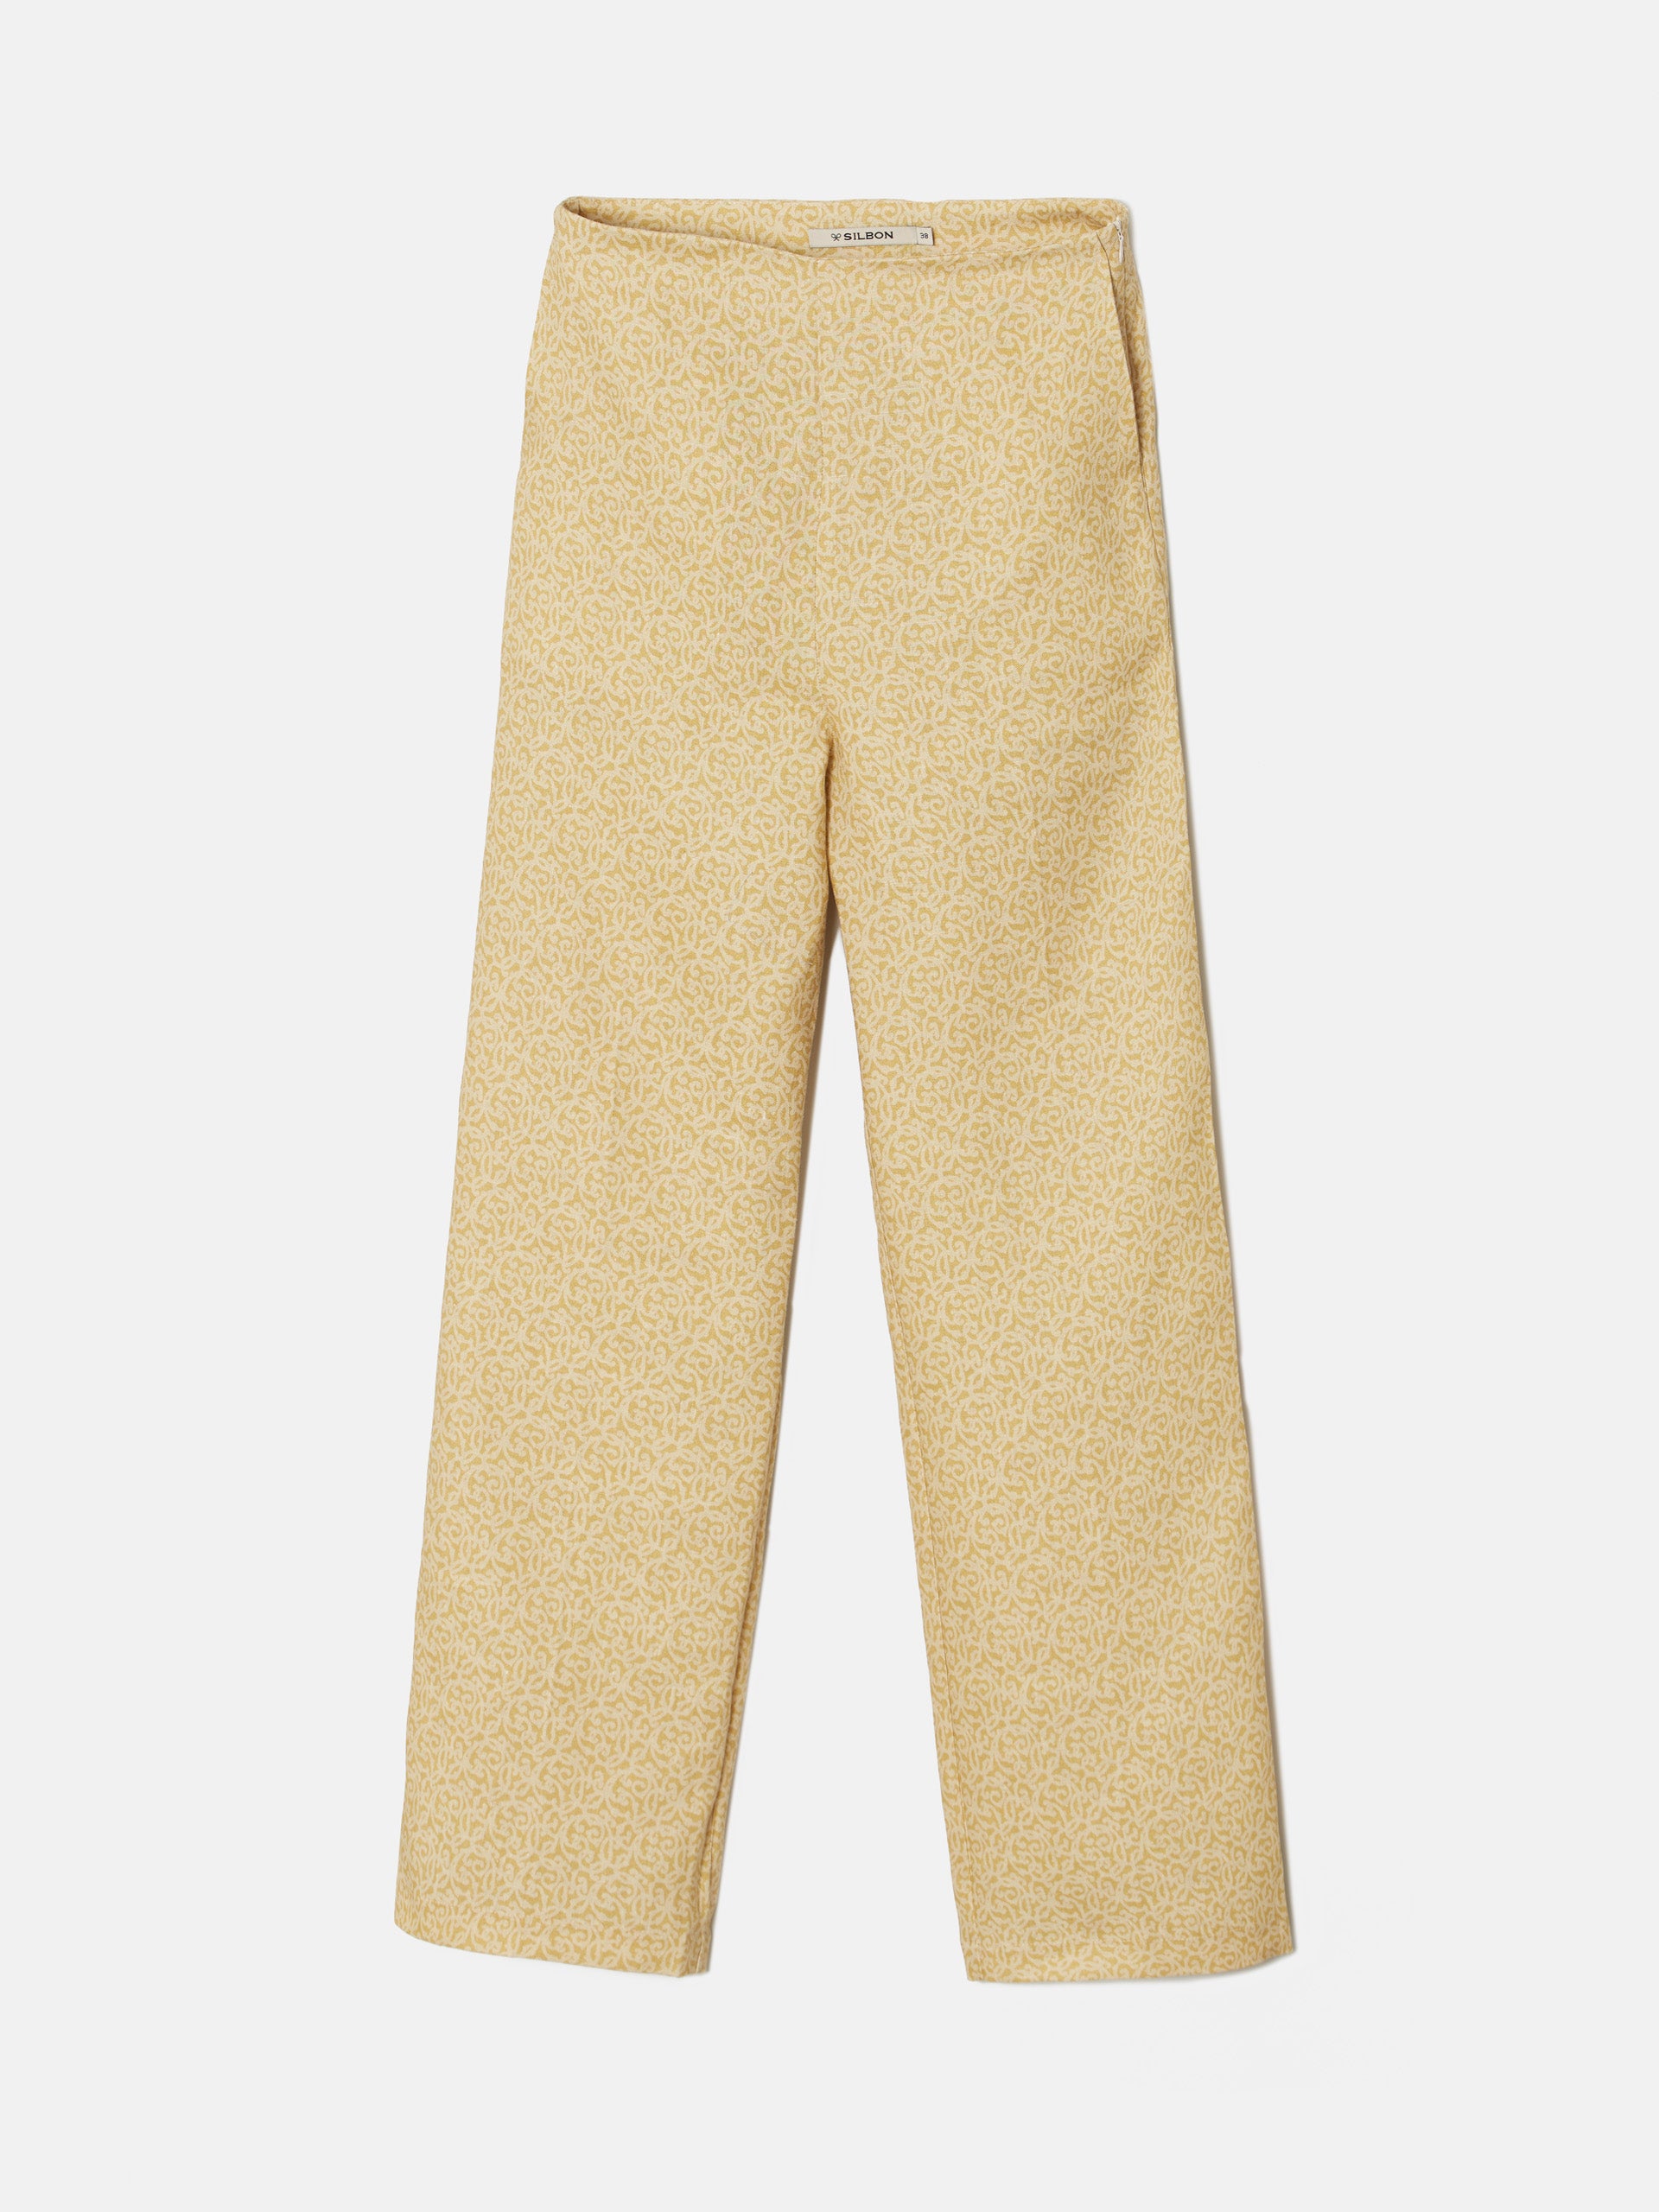 Yellow printed linen pants